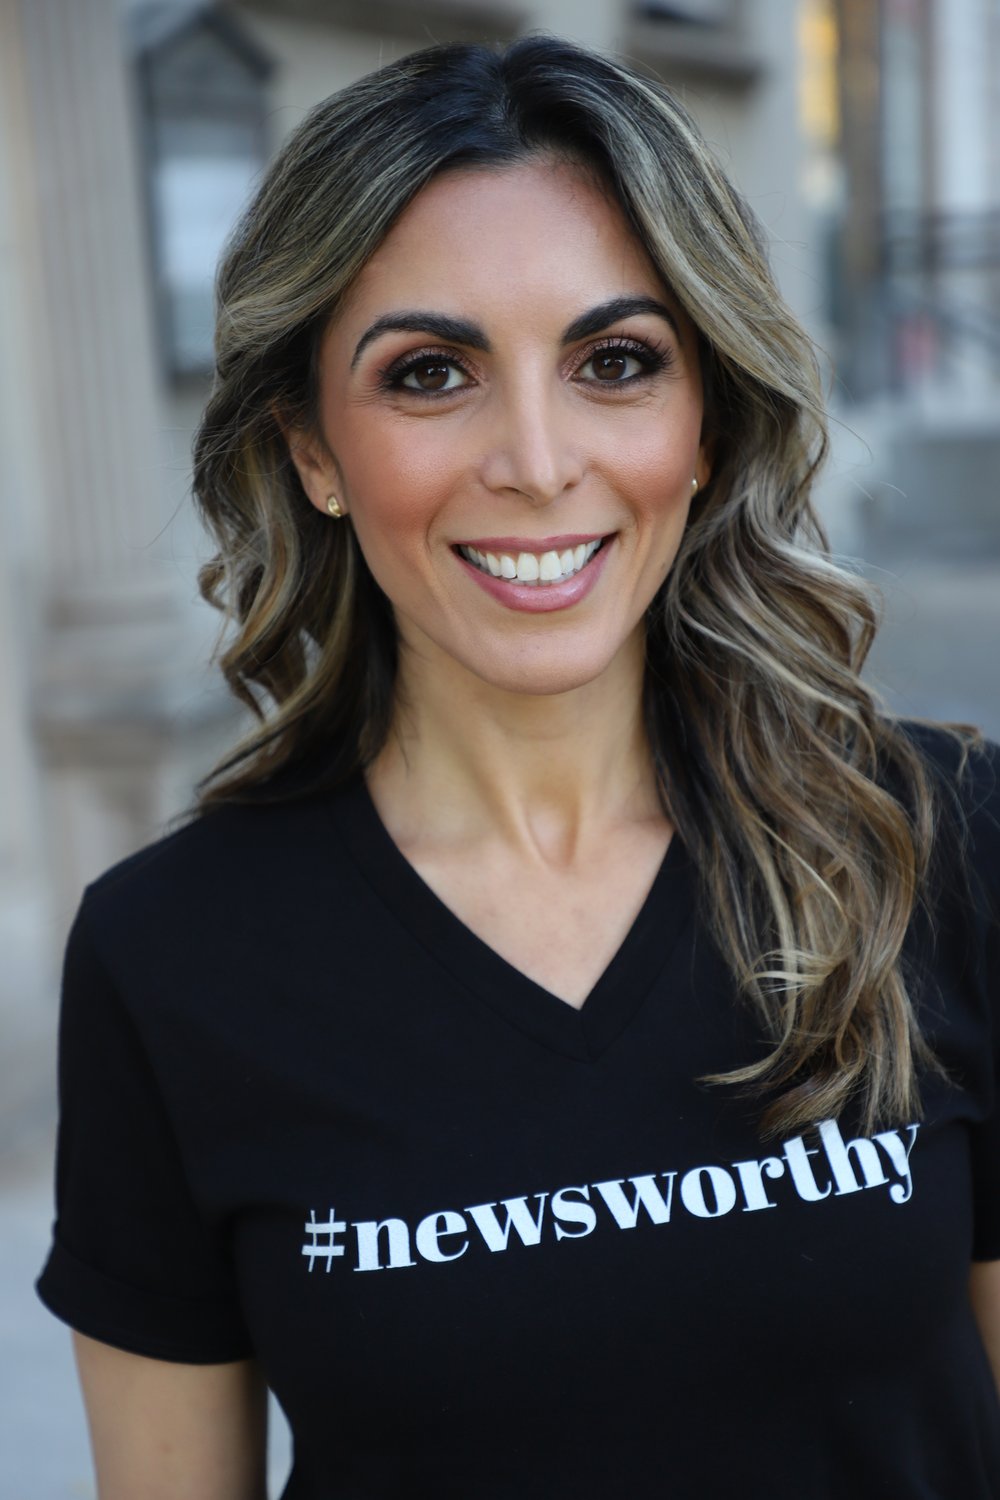 Ronica Cleary headshot t-shirt says newsworthy.JPG